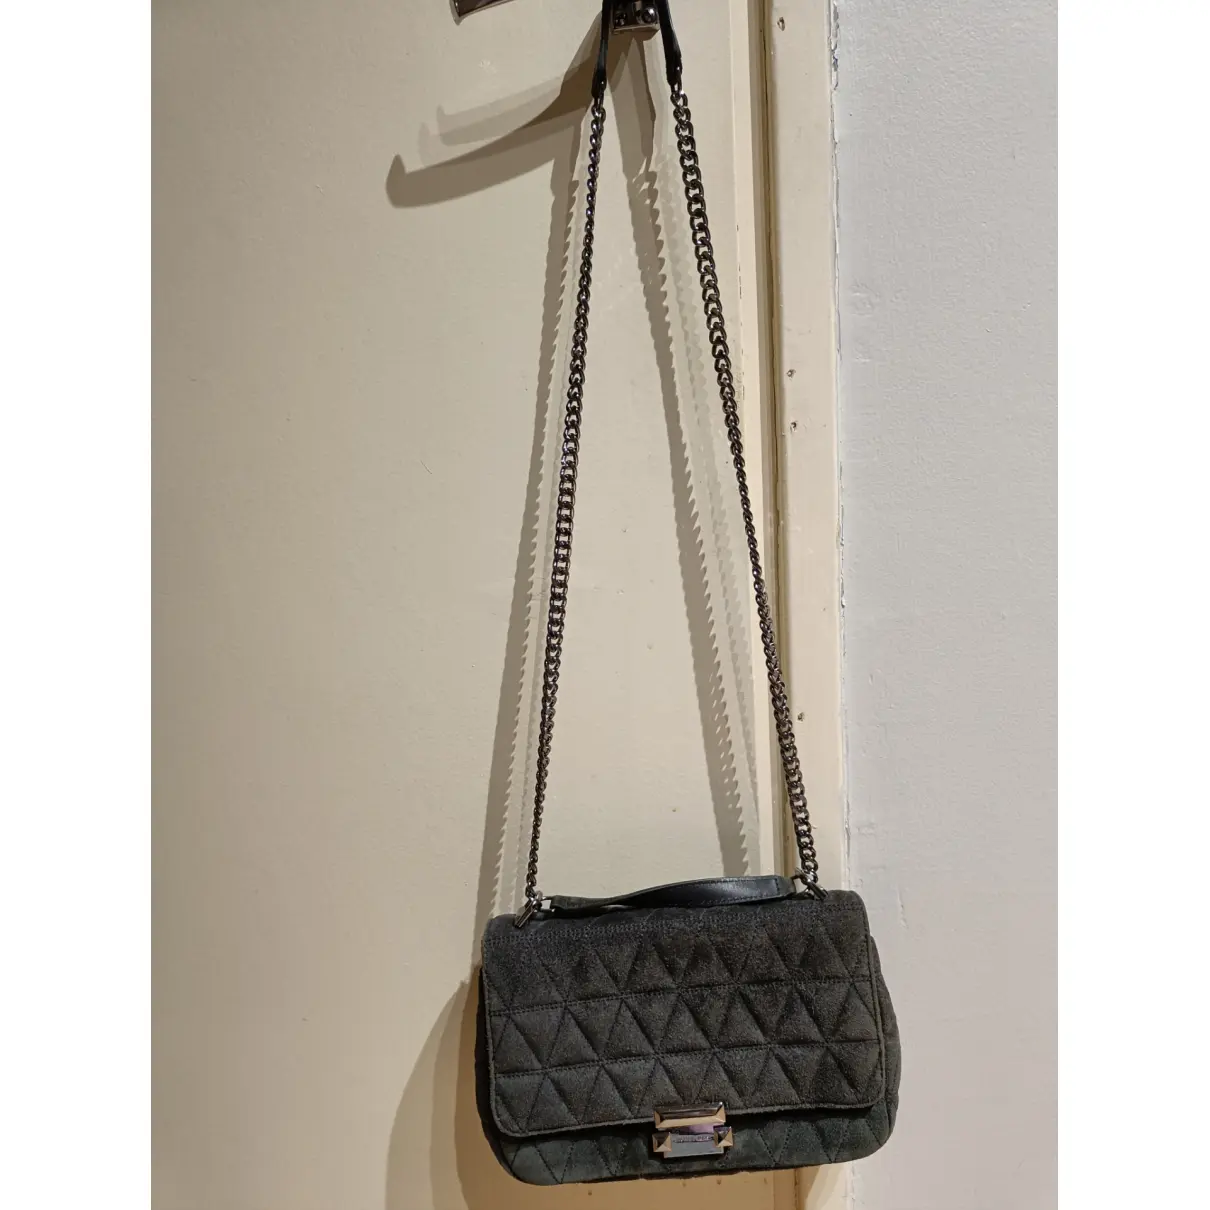 Buy Michael Kors Sloan cloth handbag online